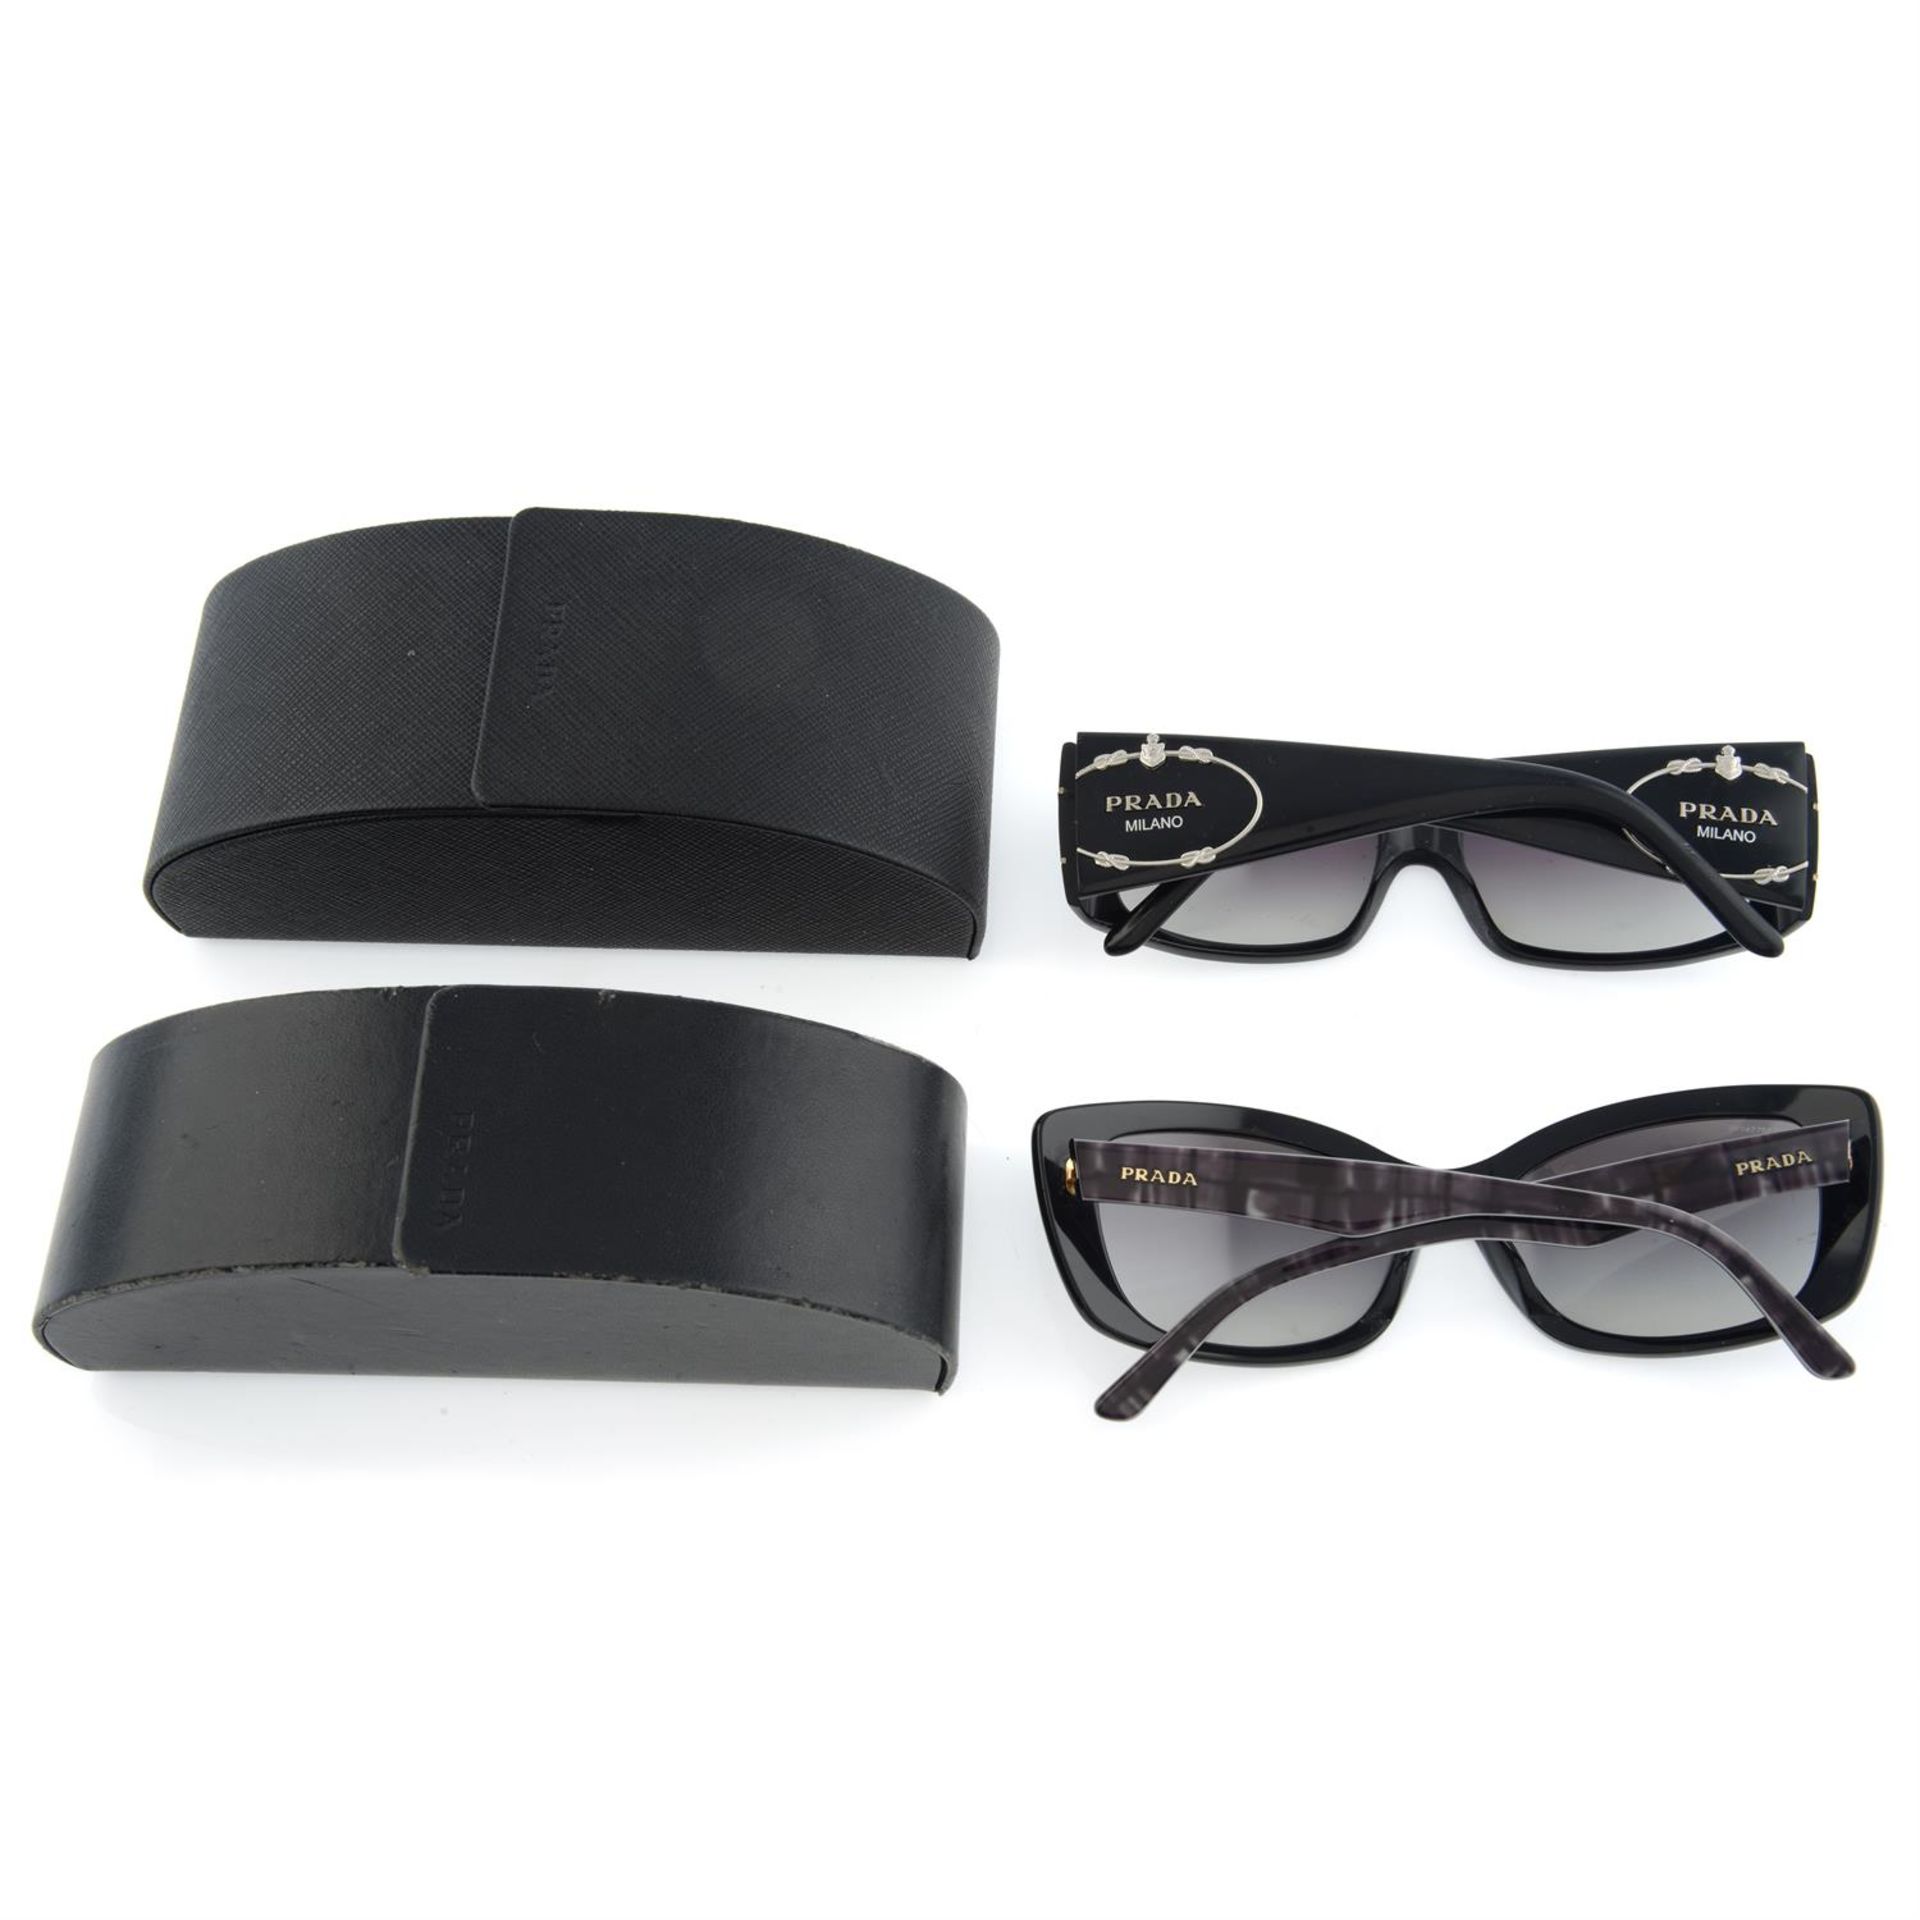 Prada - two pairs of sunglasses. - Image 2 of 2